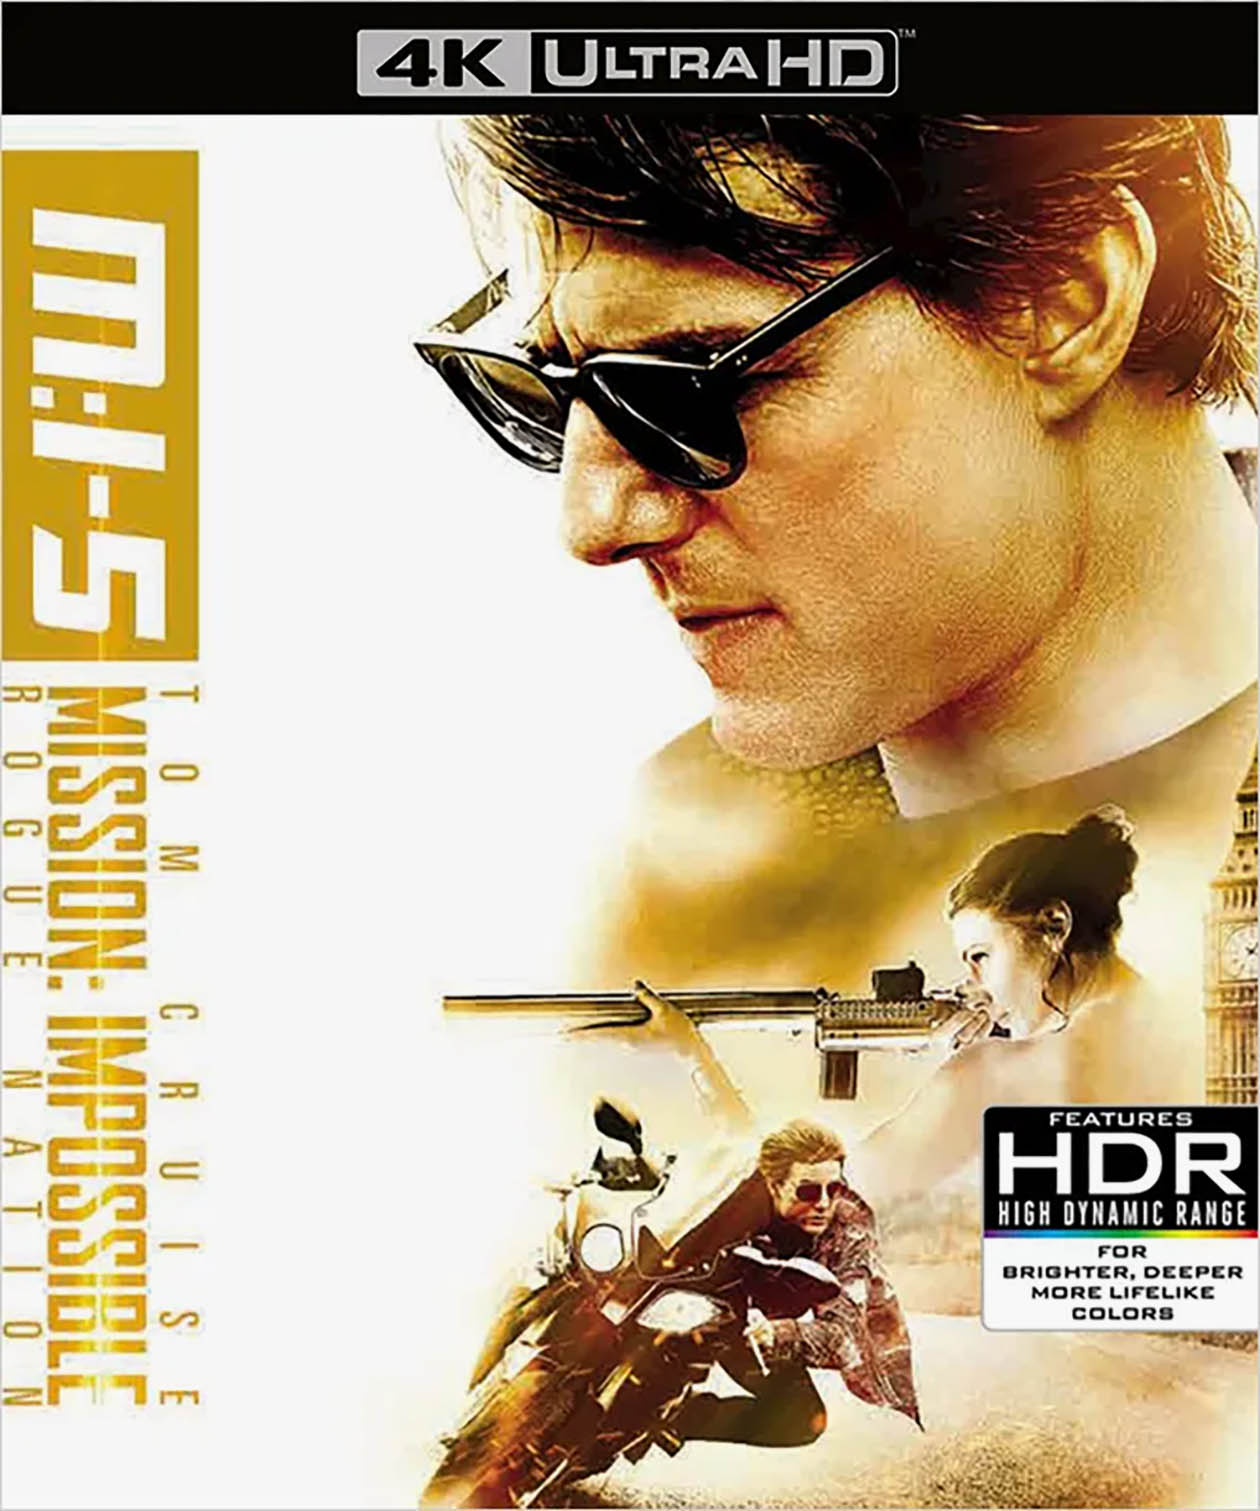 Blu⁠-⁠Ray фильма «Миссия невыполнима: Племя изгоев». На коробке пометка HDR, но какой именно — неясно. Источник: ozon.ru